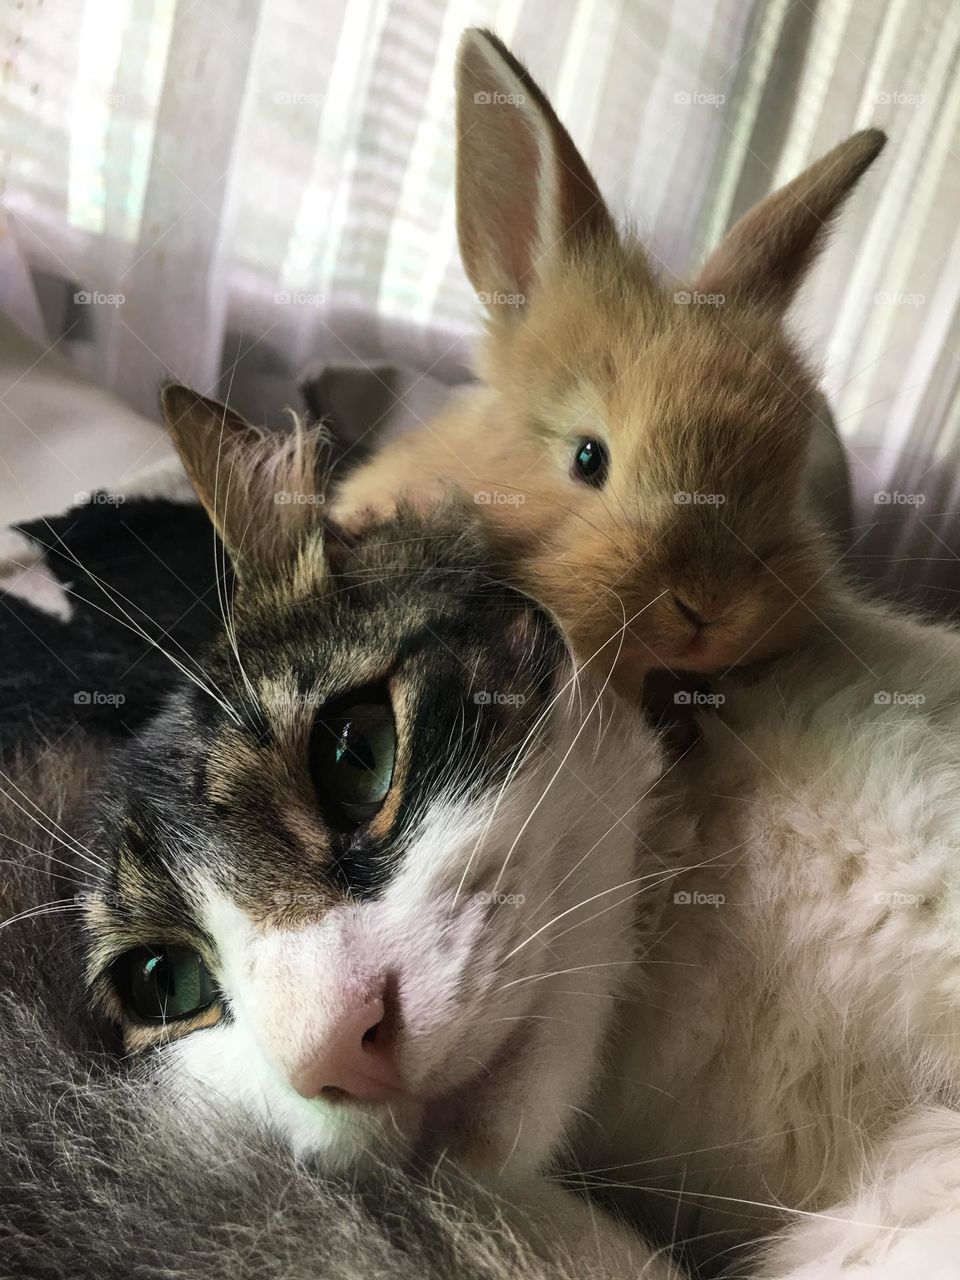 Nice kitty and baby Rabbit 